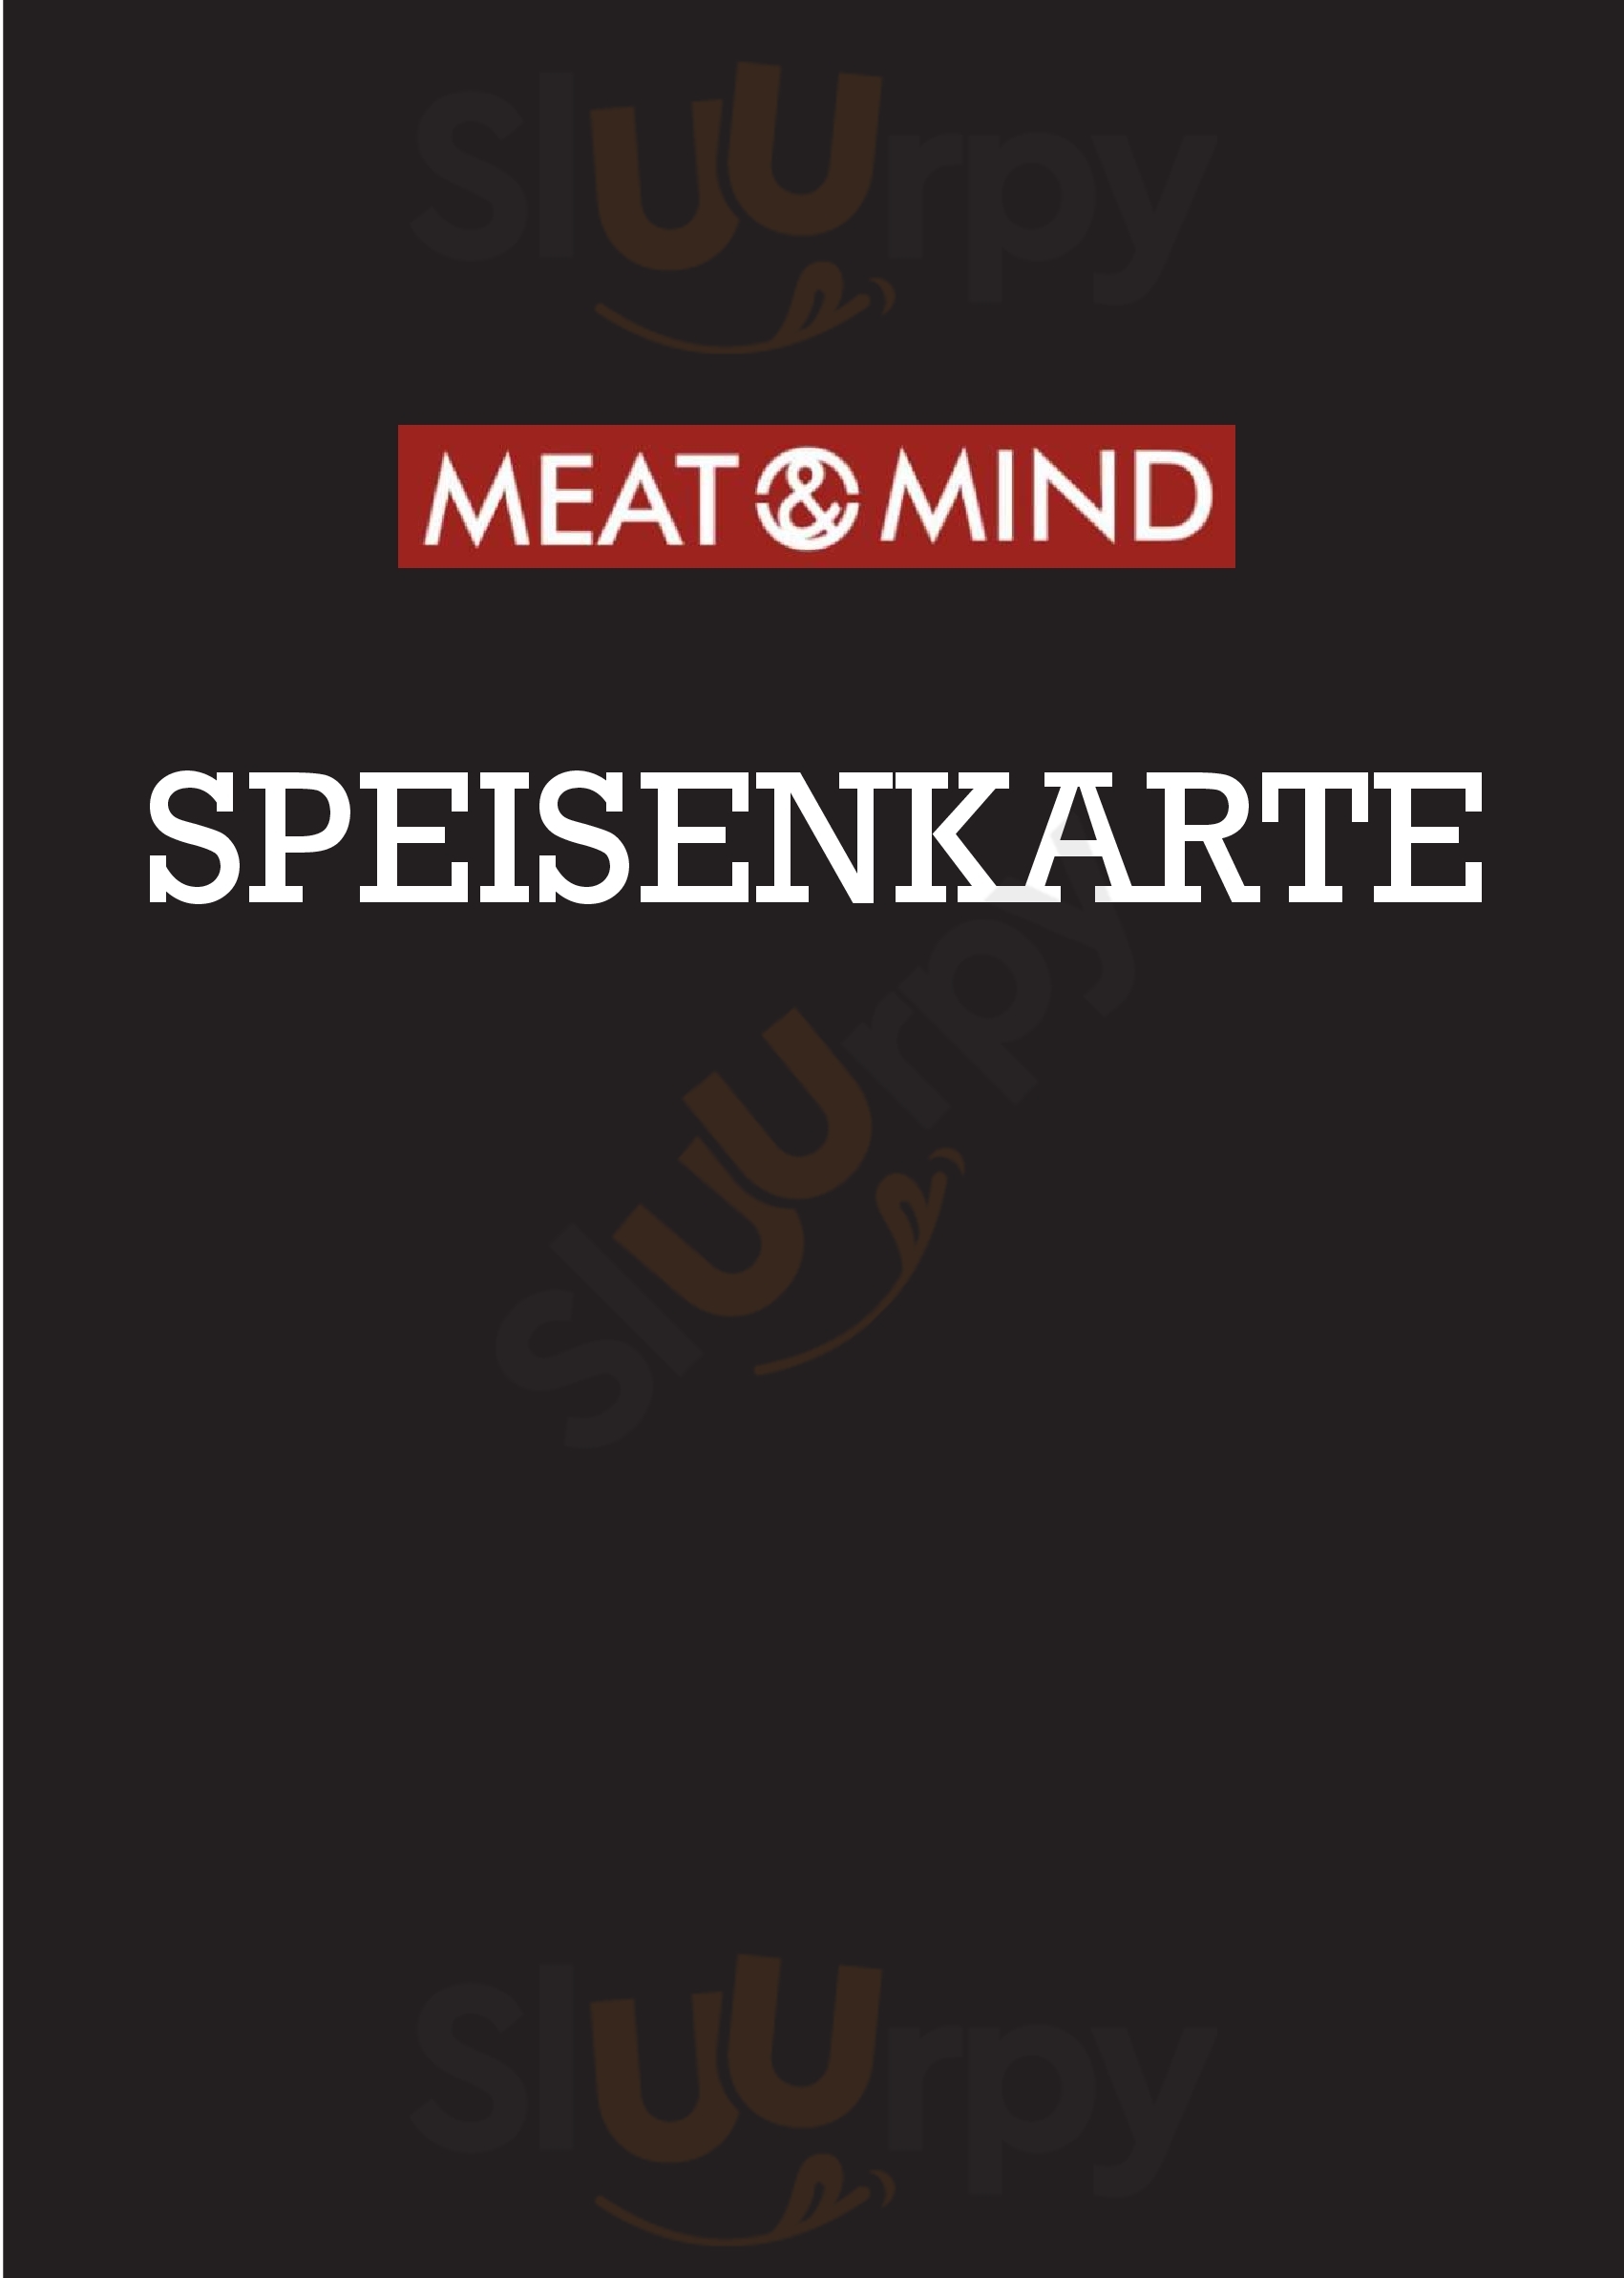 Meat & Mind Hilden Menu - 1